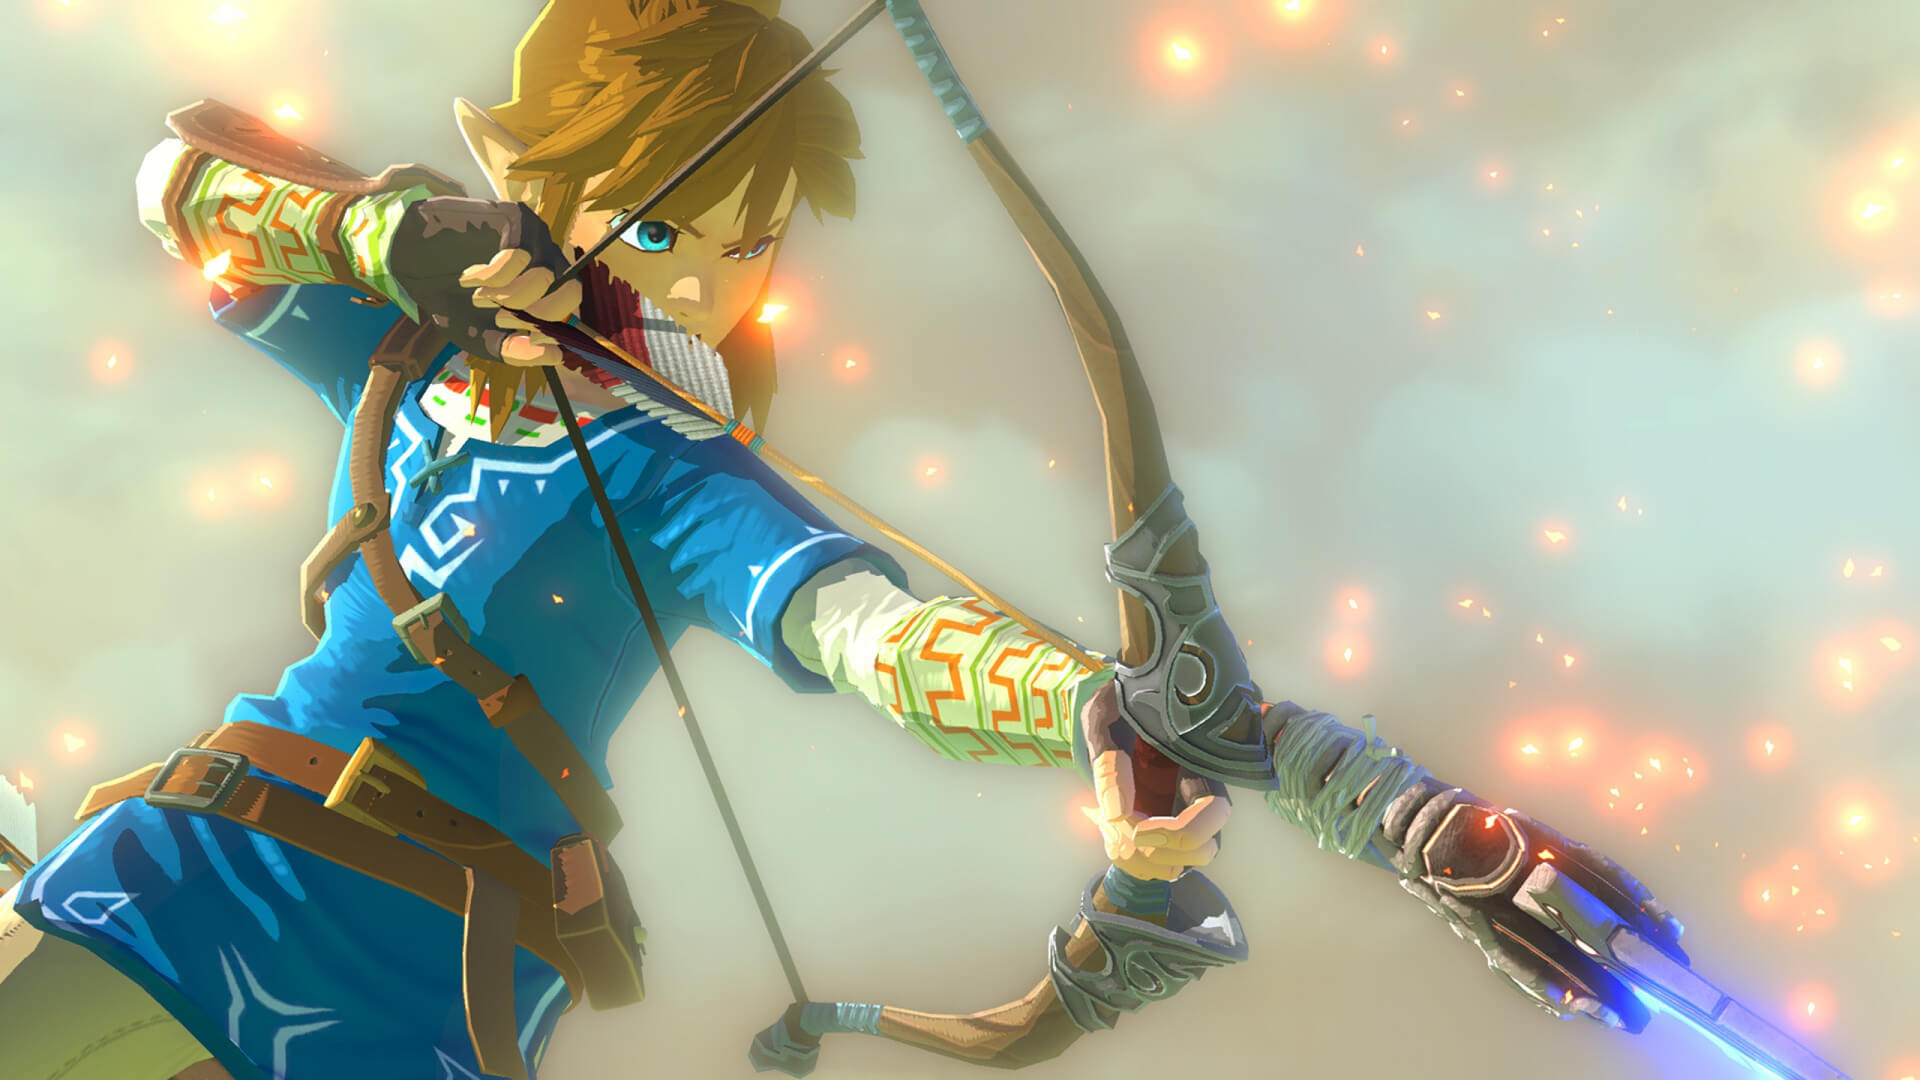 İşte ilk The Legend of Zelda: Breath of the Wild inceleme puanları